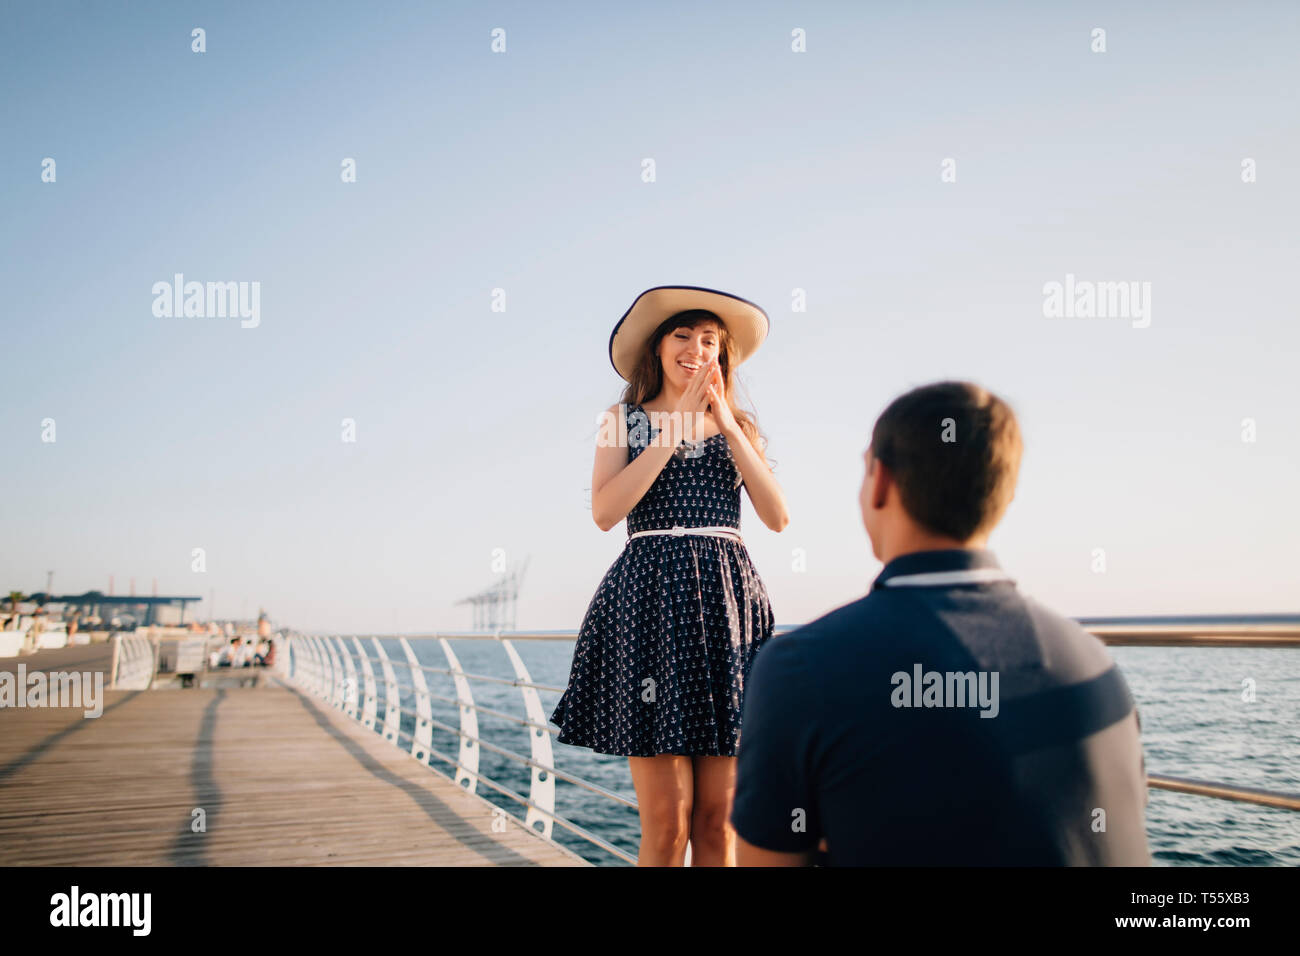 Man proposing to woman on pier Stock Photo